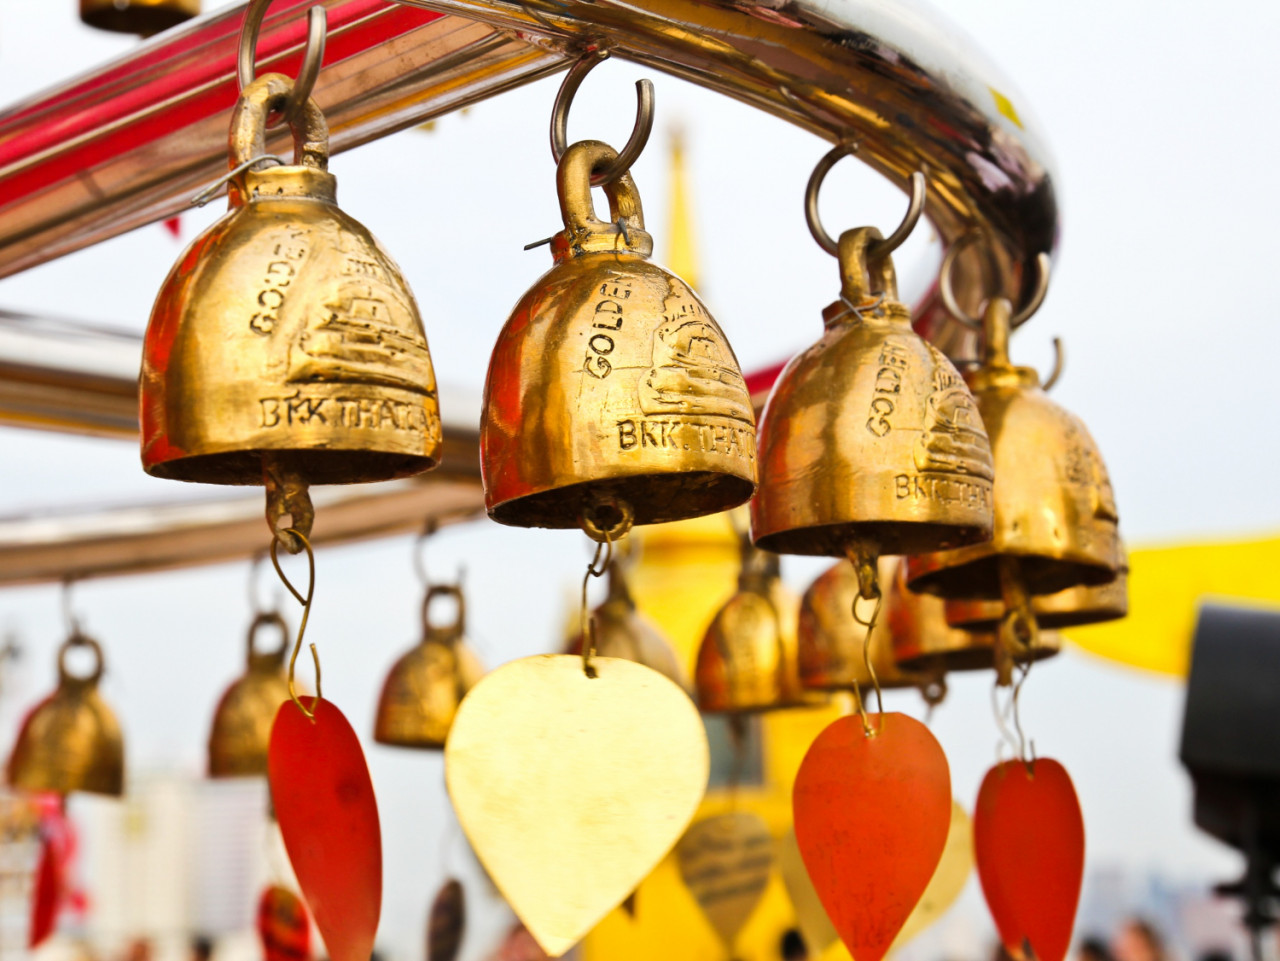 buddhist bells wat saket golden mount bangkok thailand